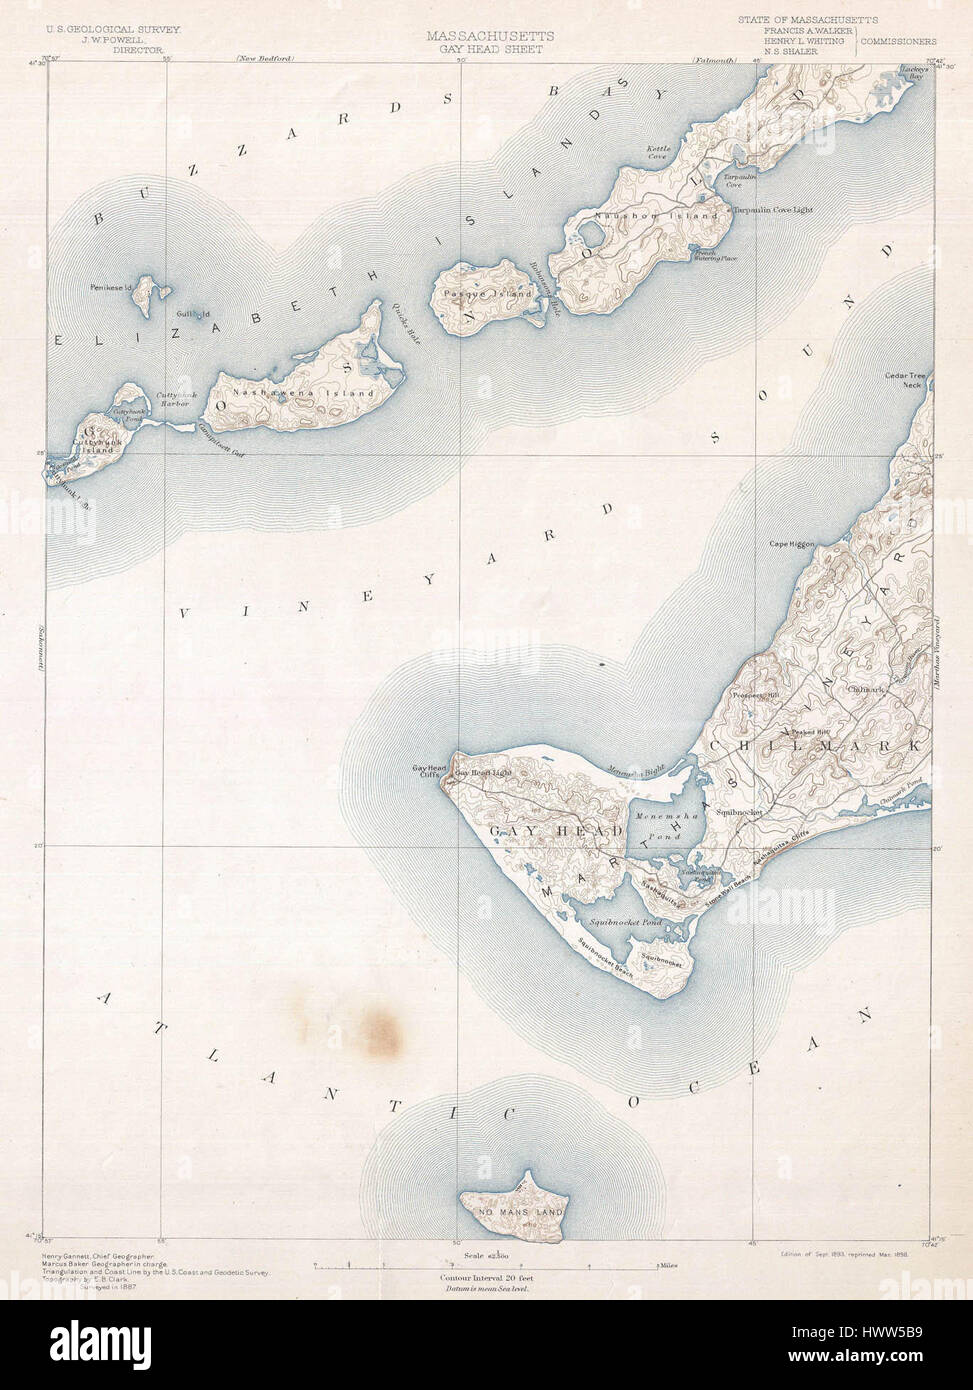 1898 U.S. Geological Survey Map of Gay Head, Marthas Vineyard, Massachusetts   Geographicus   MarthasVineyardW USGS 1898 Stock Photo